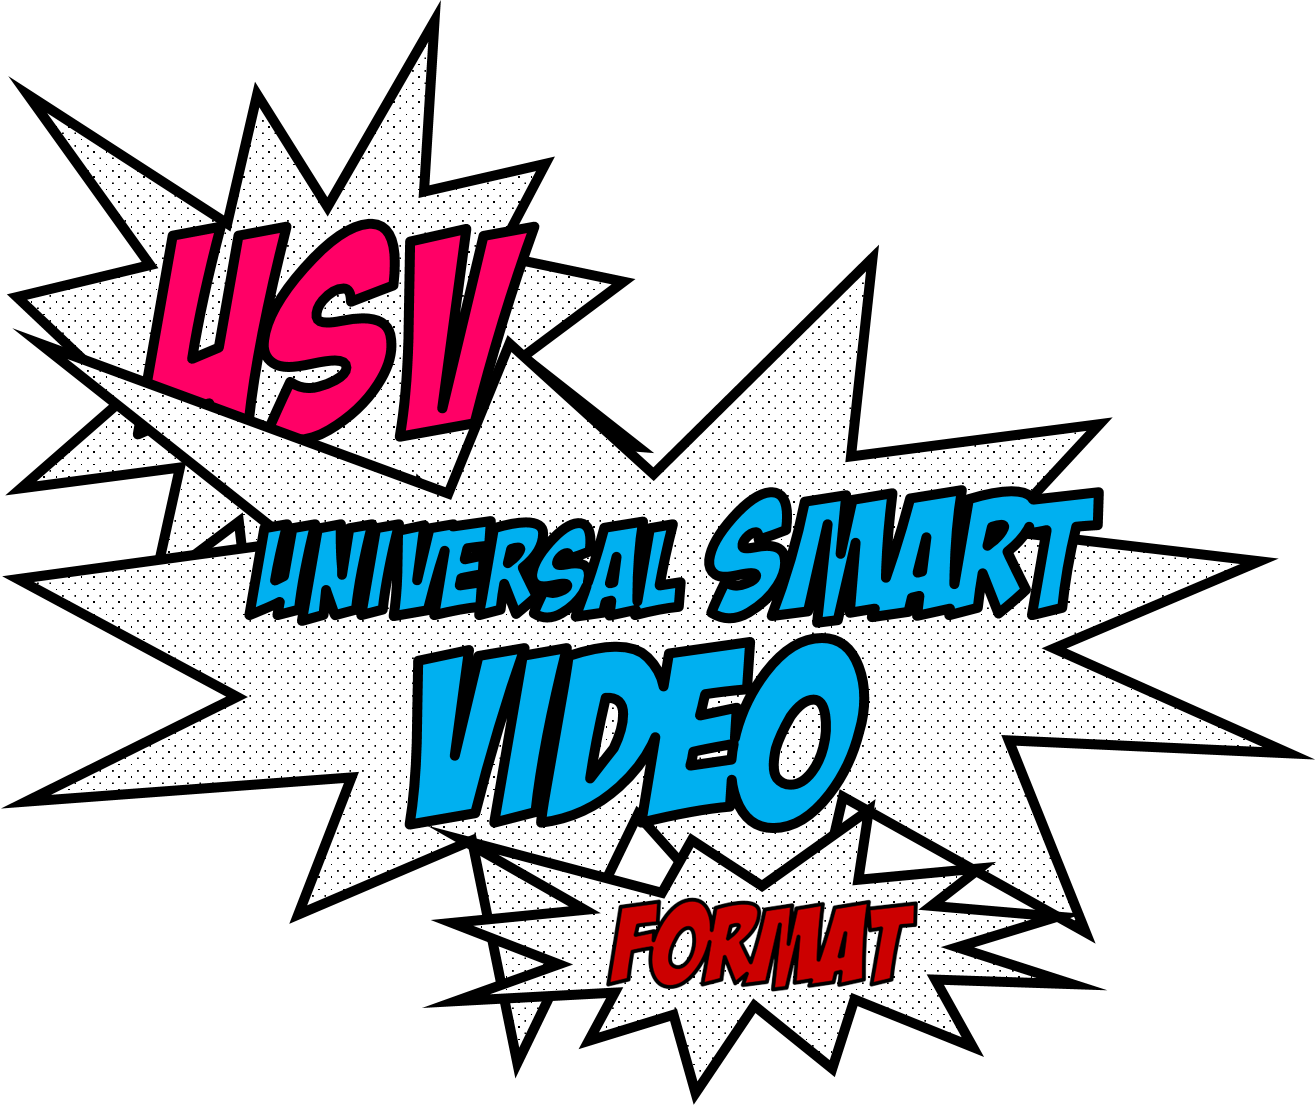 USV - Universal Smart Video format